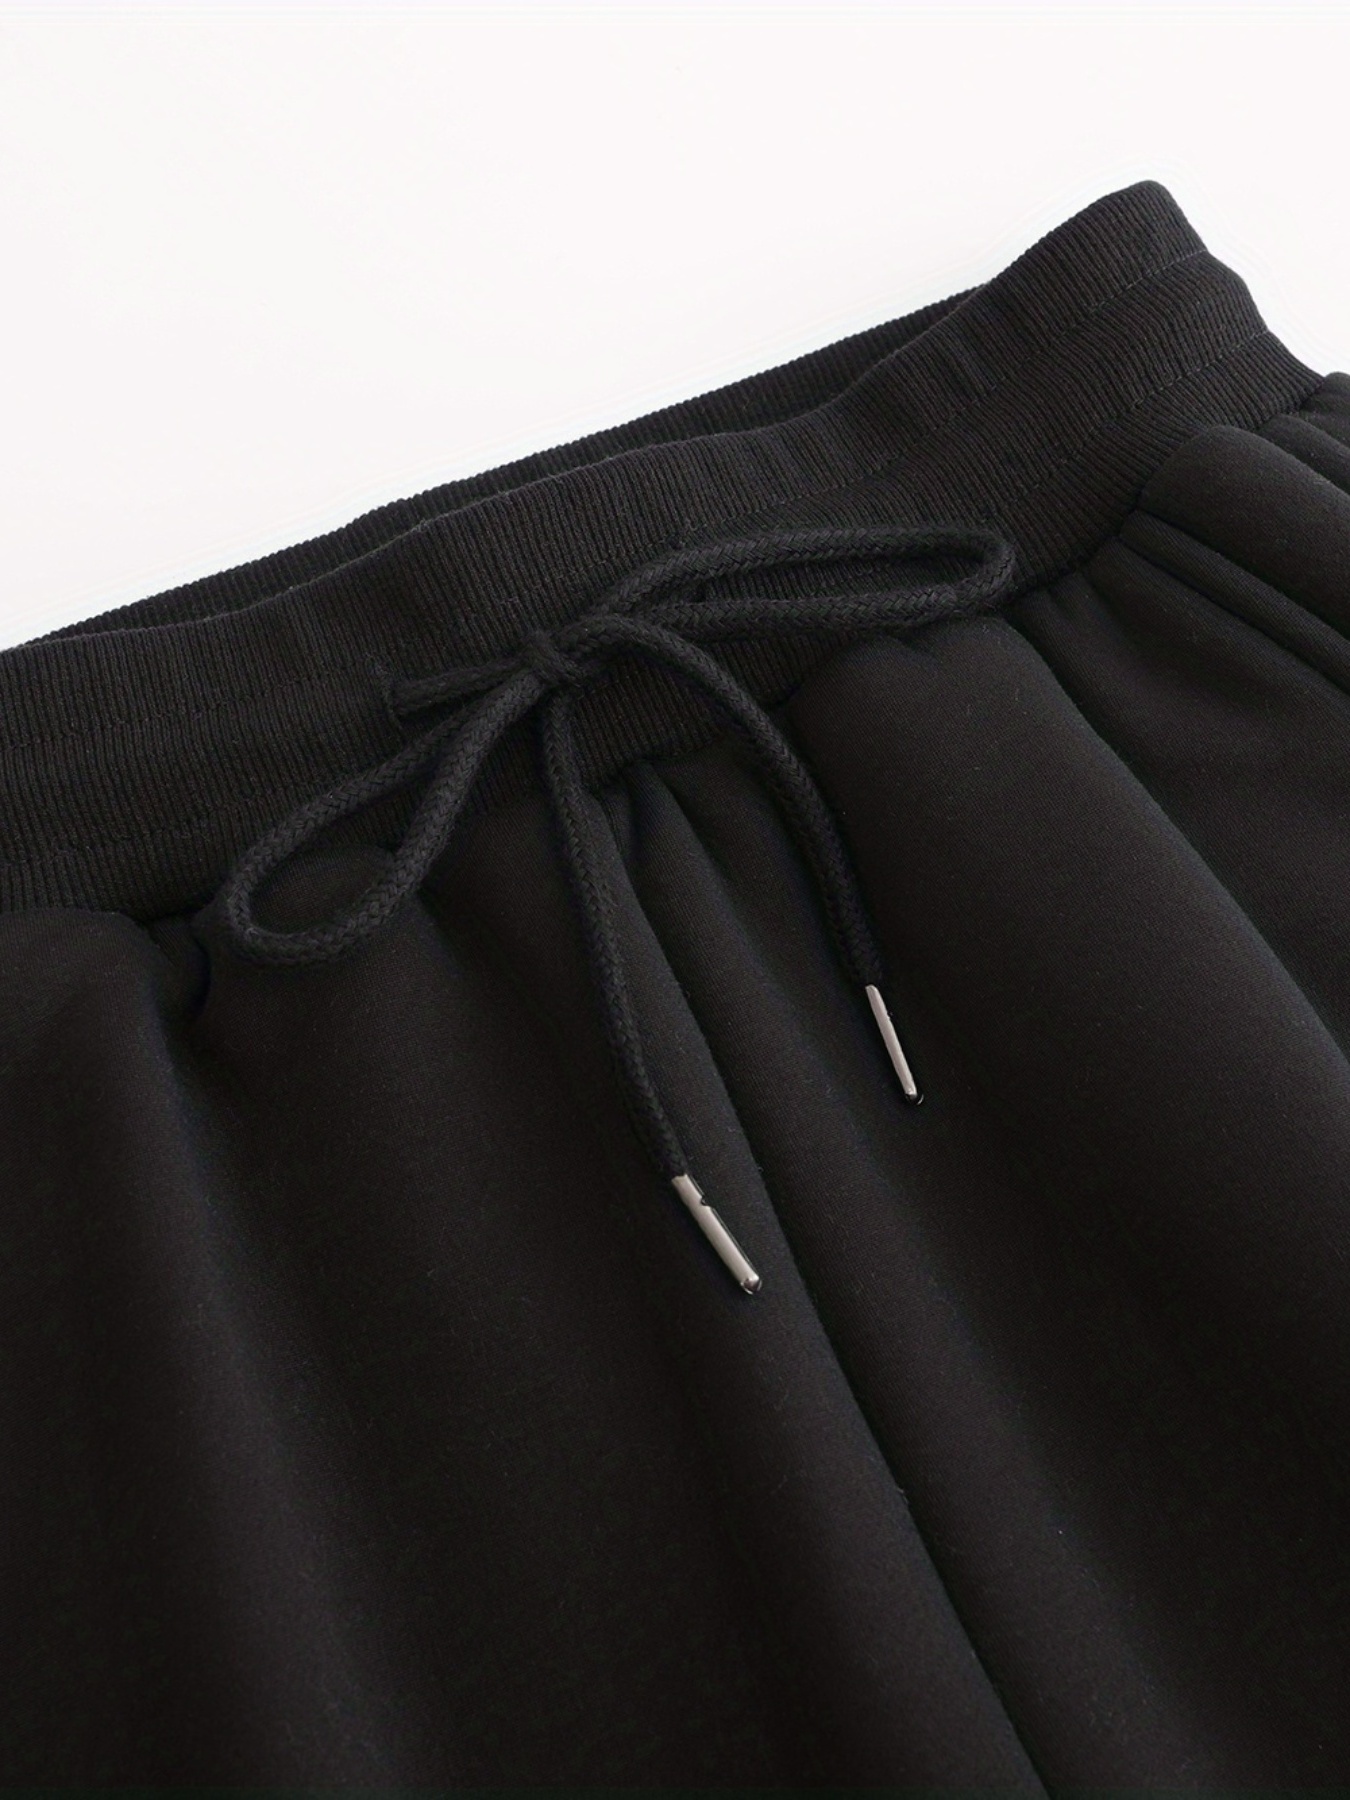 plush thermal pants, winter plush thermal pants casual drawstring pocket pants womens clothing details 22